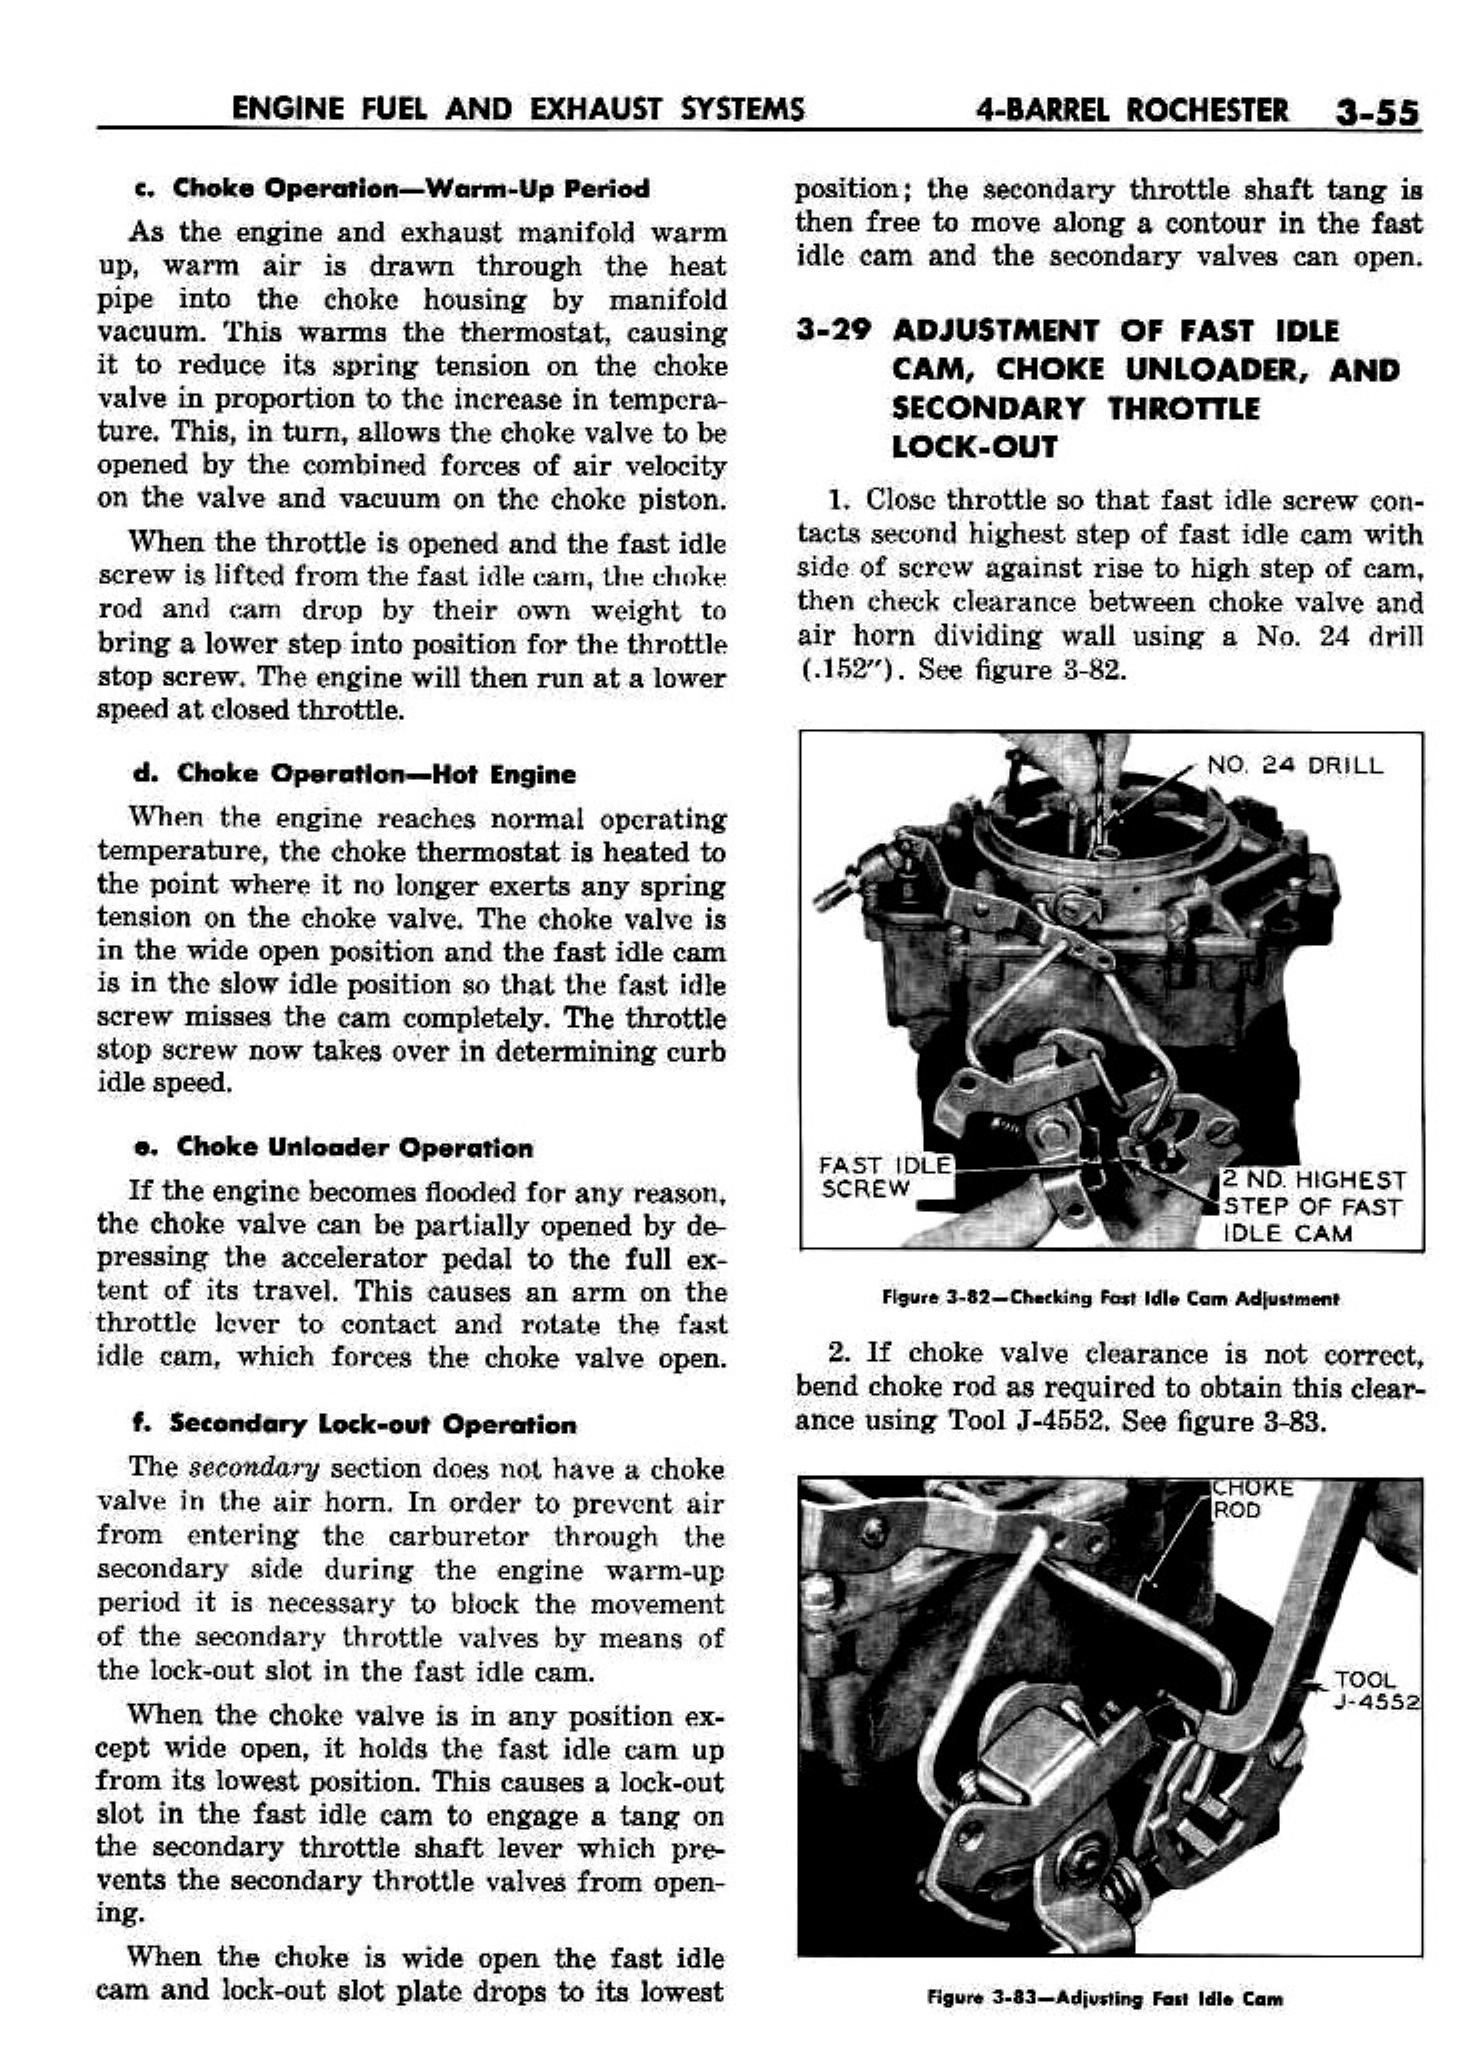 n_04 1958 Buick Shop Manual - Engine Fuel & Exhaust_55.jpg